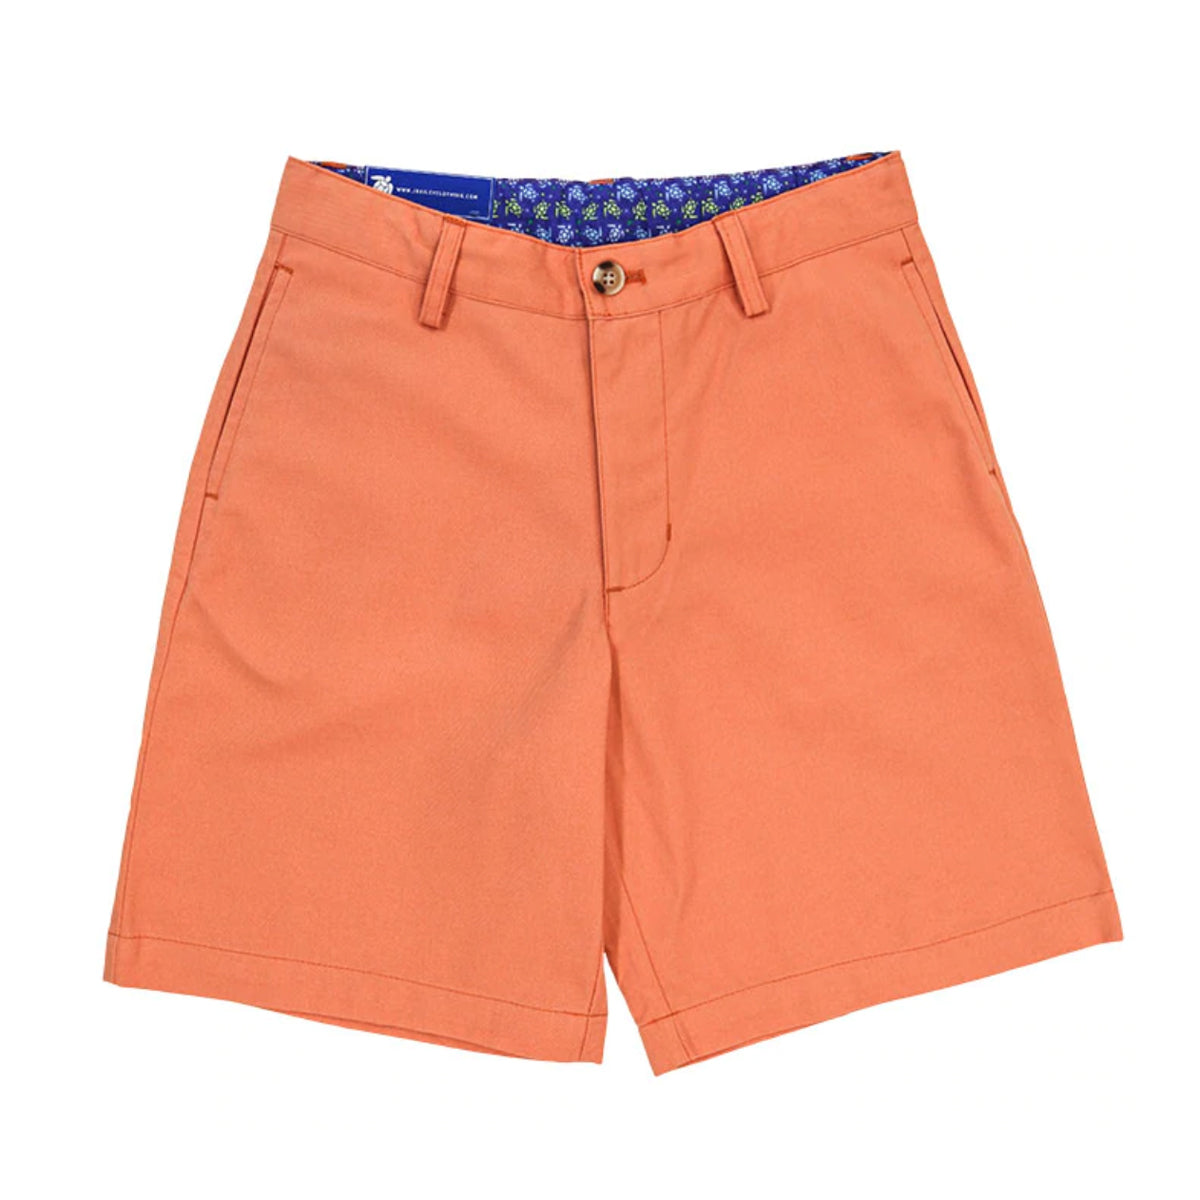 Tangerine Twill Shorts